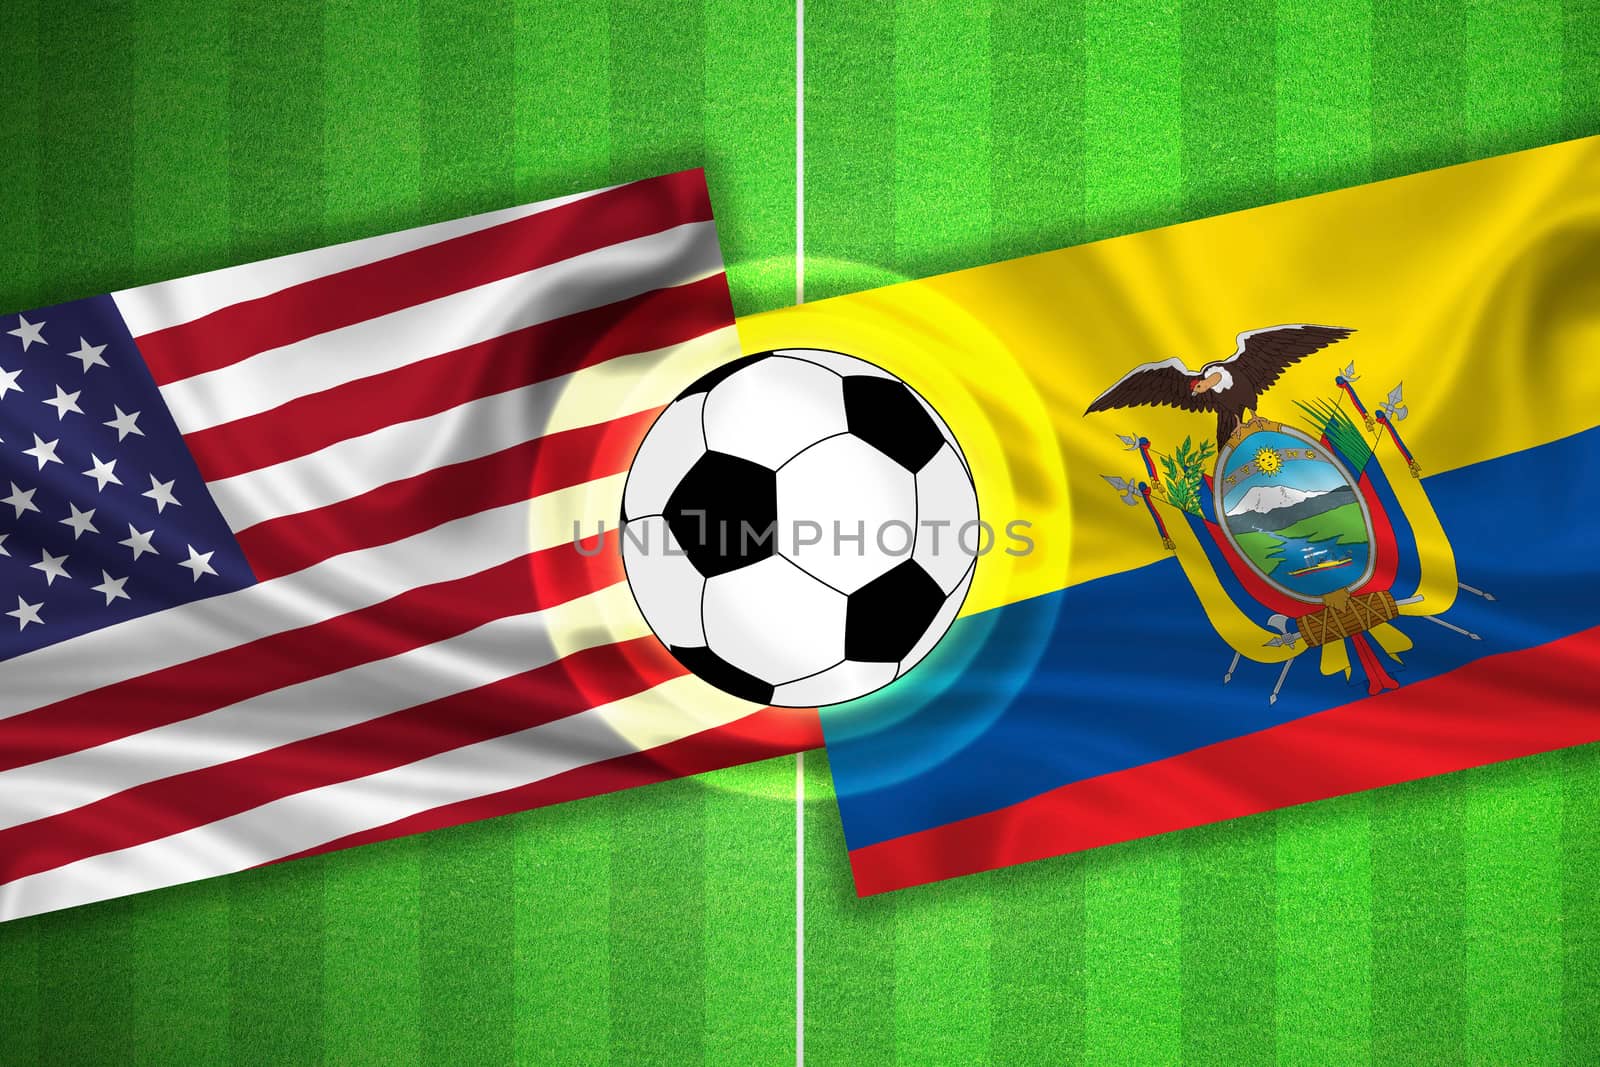 USA / America - Ecuador - Soccer field with ball by aldorado